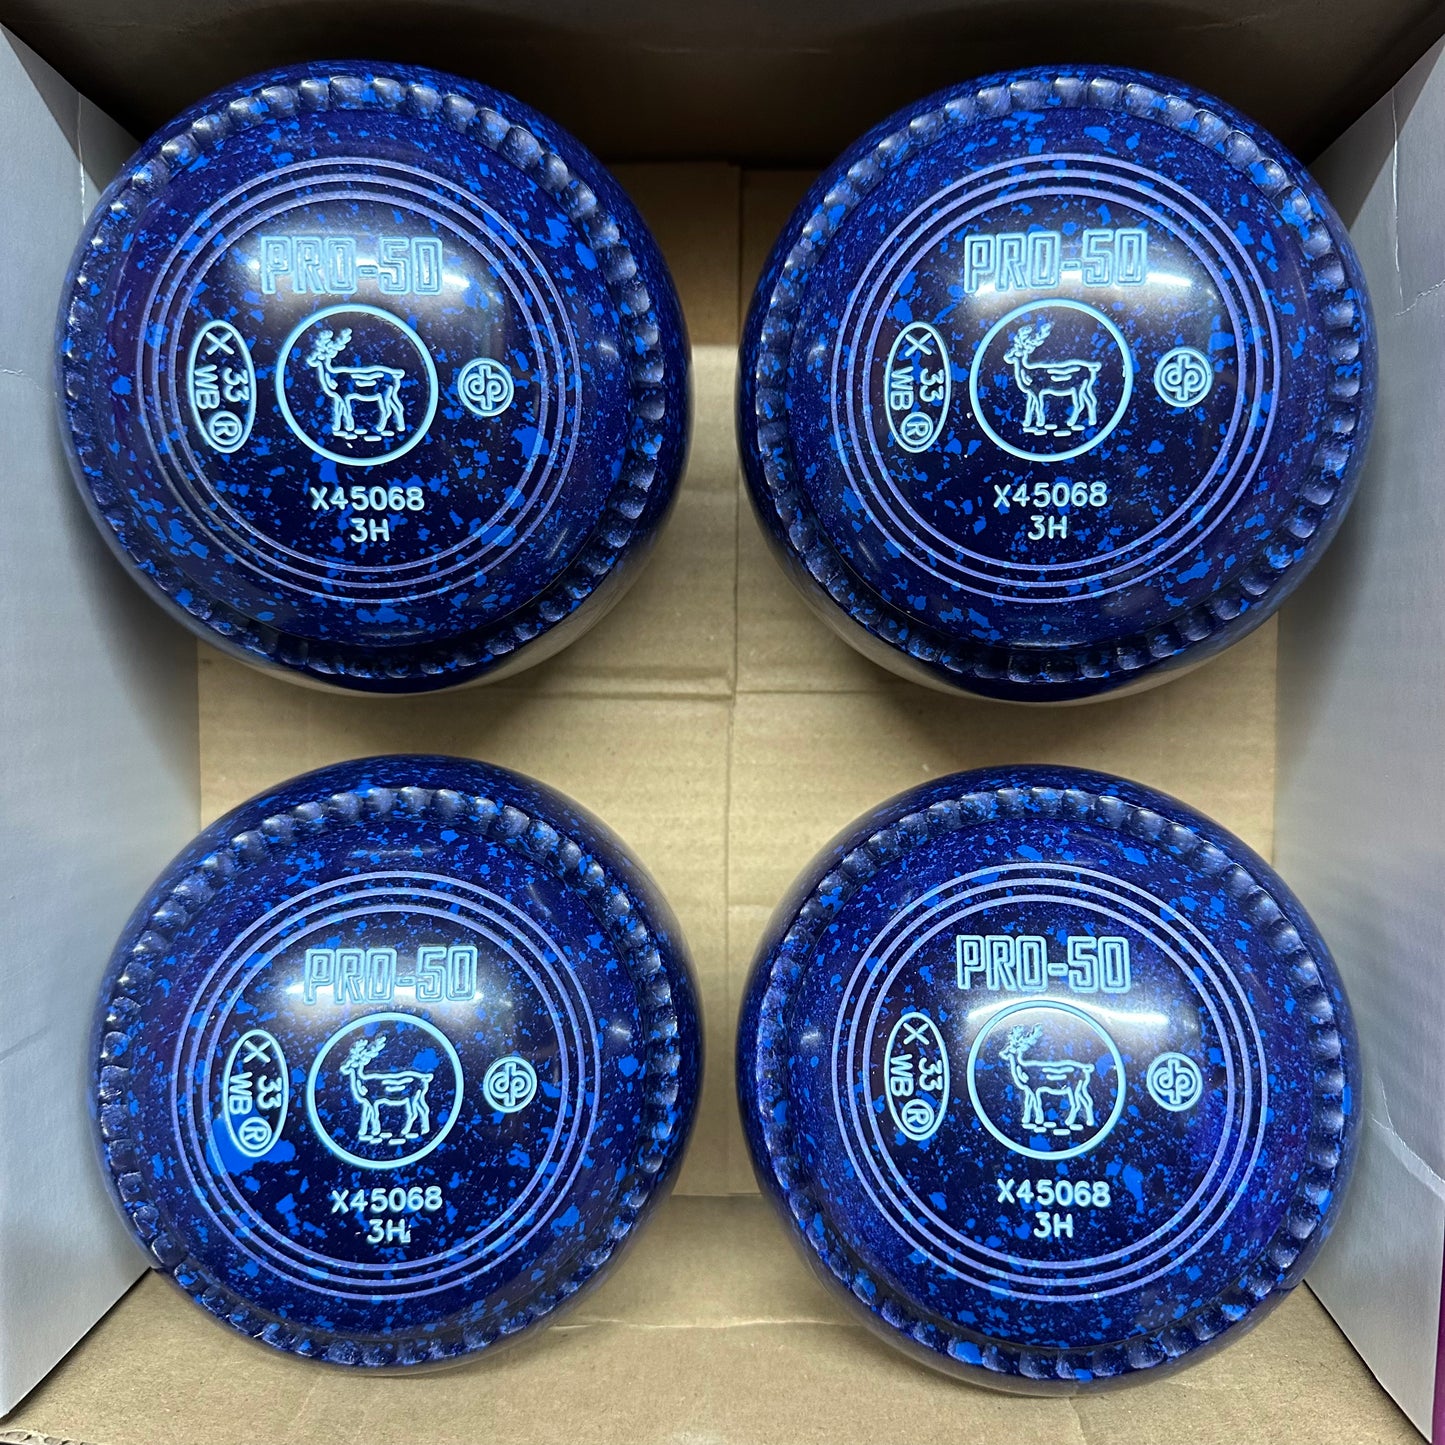 Drakes Pride PRO-50 - Size 3H - Dark Blue/Blue (Light Blue Rings) - WB33 Stamp